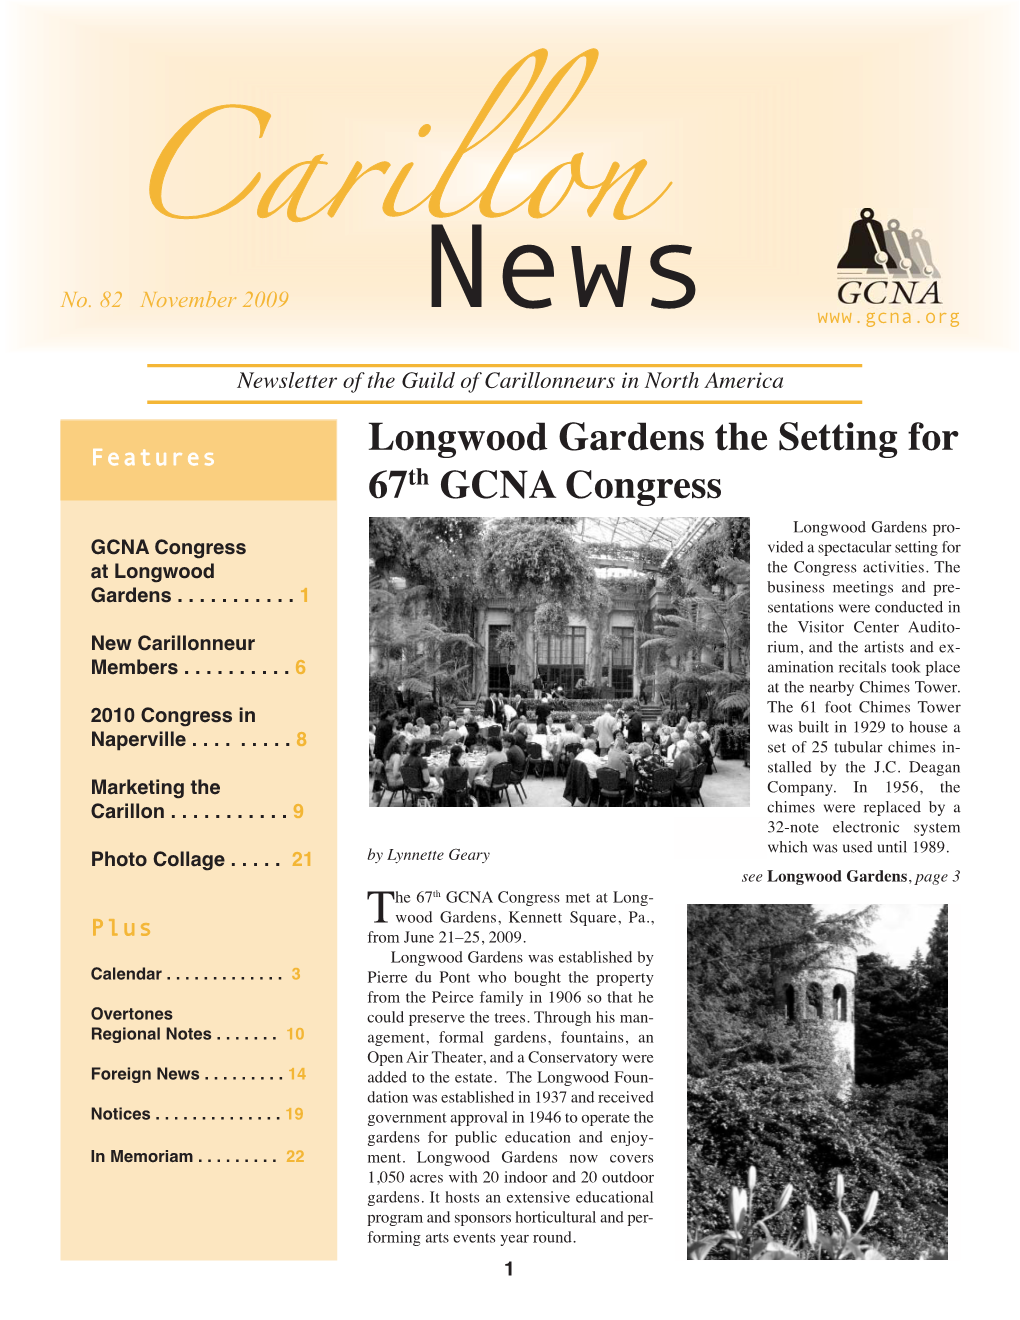 Carillon News No. 82